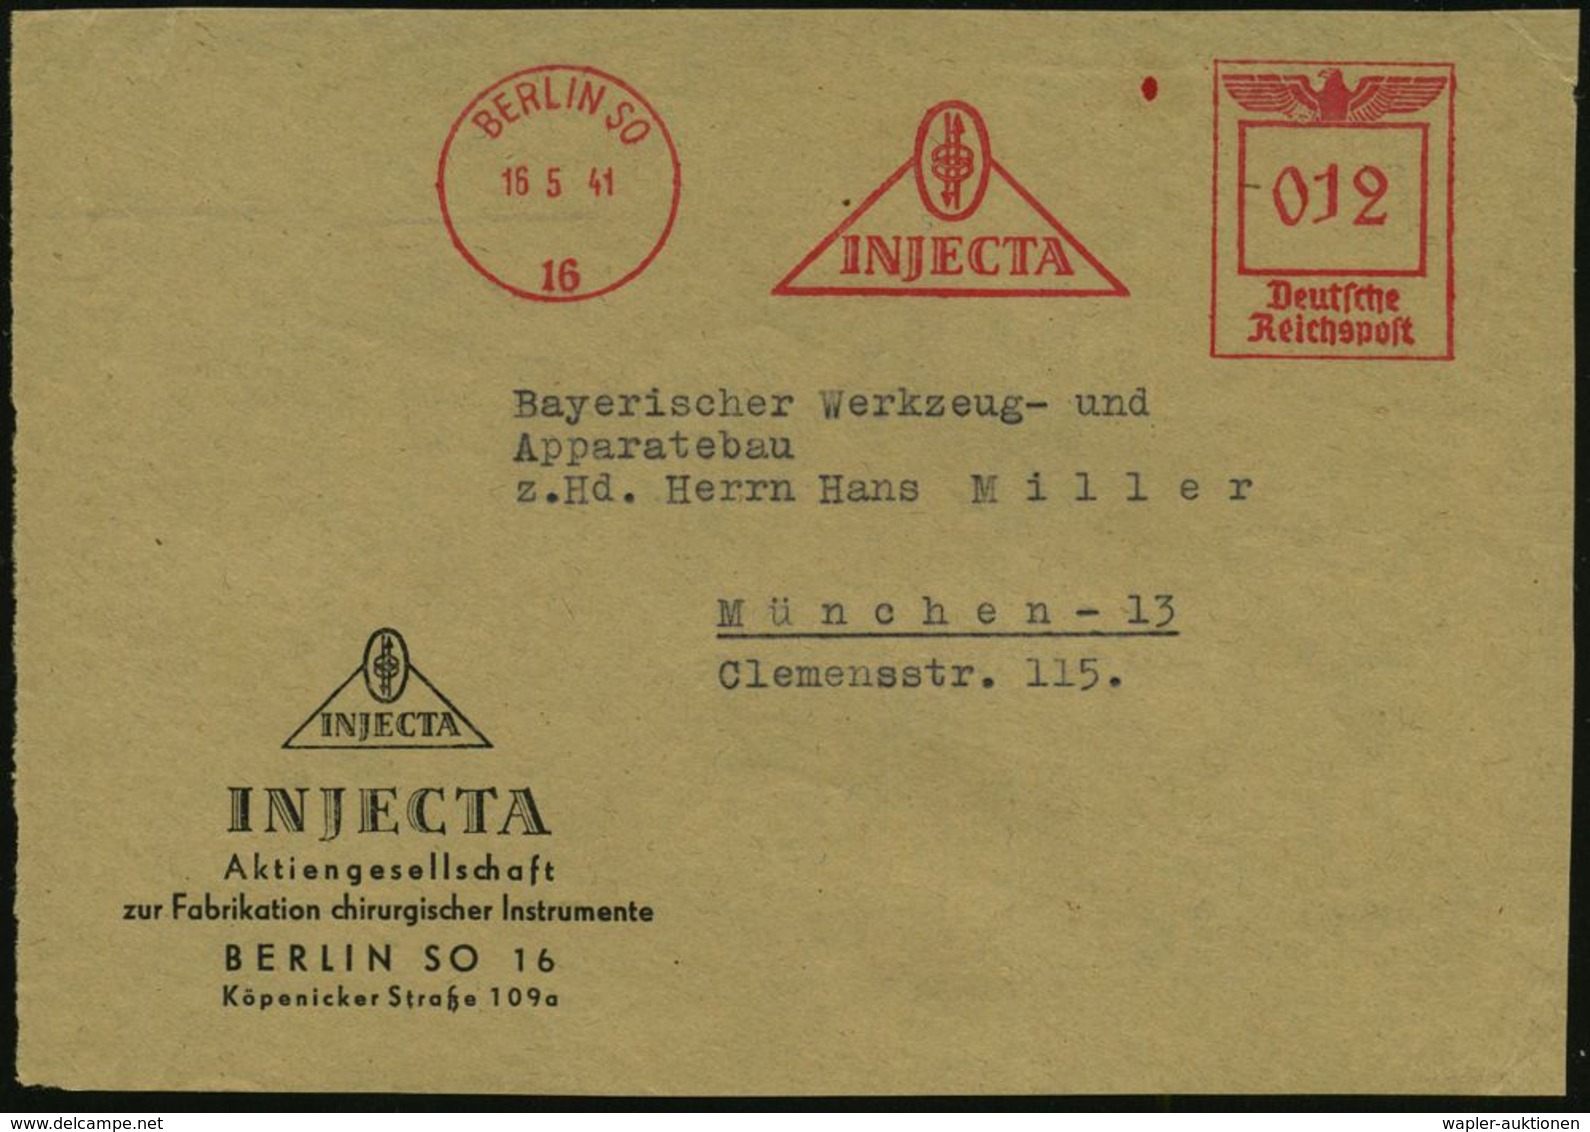 MEDIZINISCHE AUSRÜSTUNG & INSTRUMENTE : BERLIN SO/ 16/ INJECTA 1941 (16.5.) AFS (Logo) Motivgl. Firmen-Vs.: INJECTA, Fab - Medizin